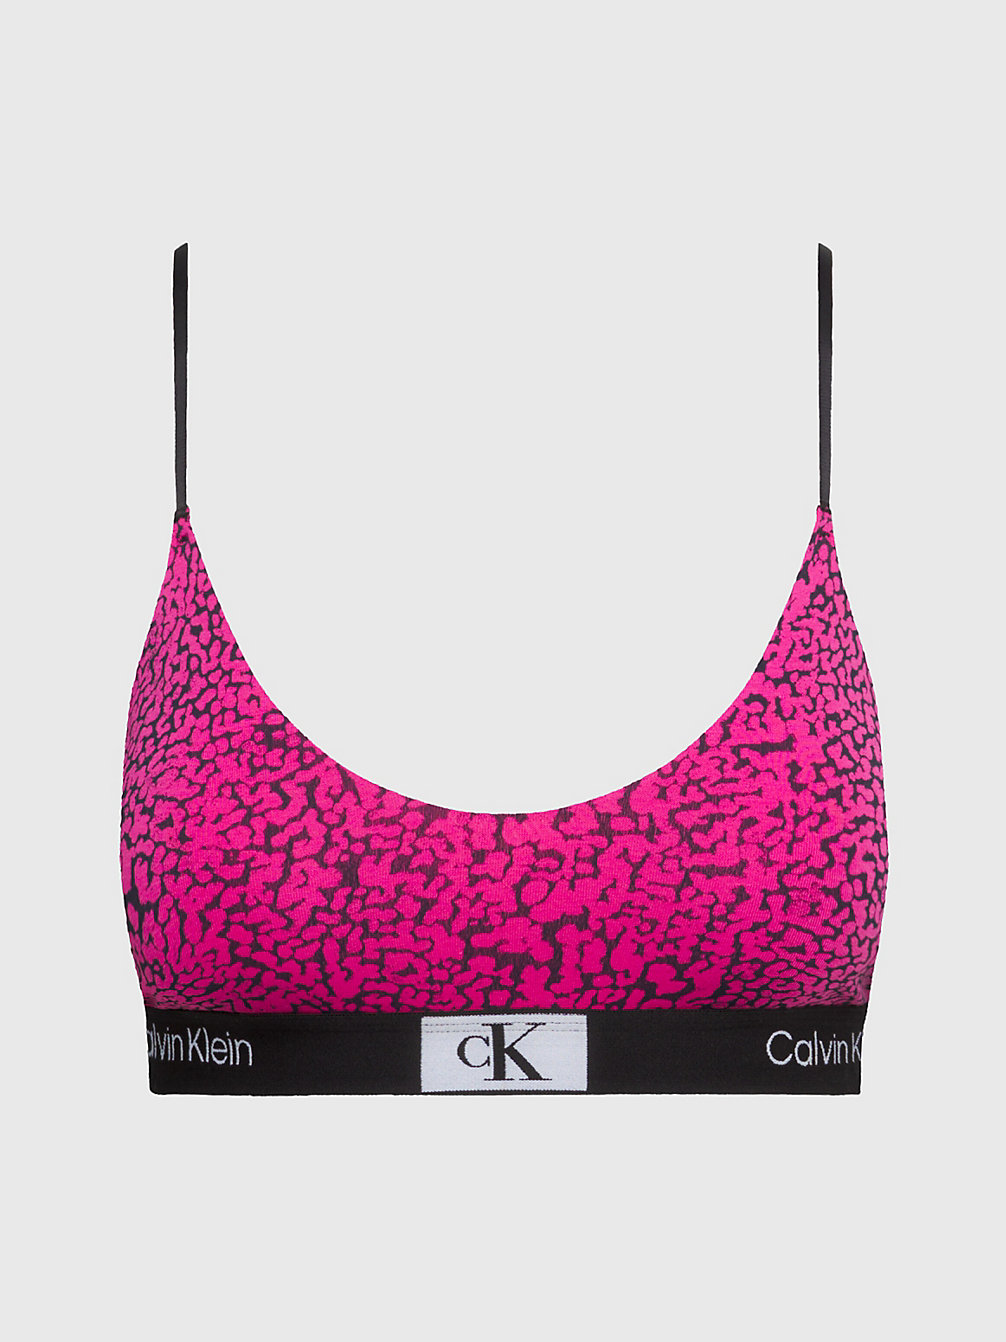 ABSTRACT SPOTS - FUCHSIA ROSE String-Bralette - Ck96 undefined Damen Calvin Klein